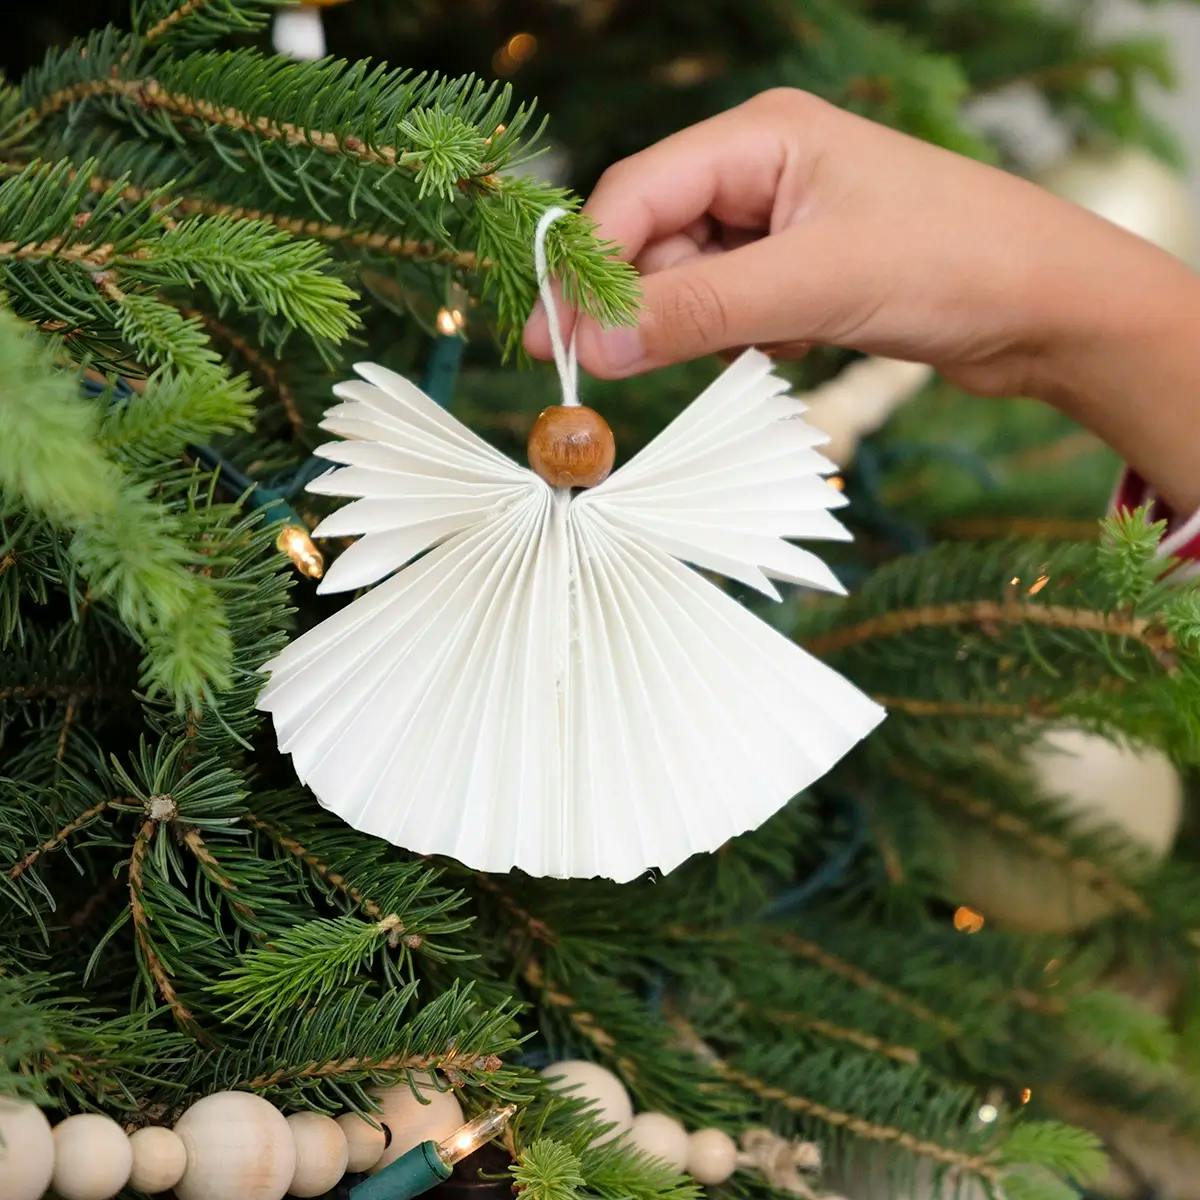 A homemade Angel paper ornament.